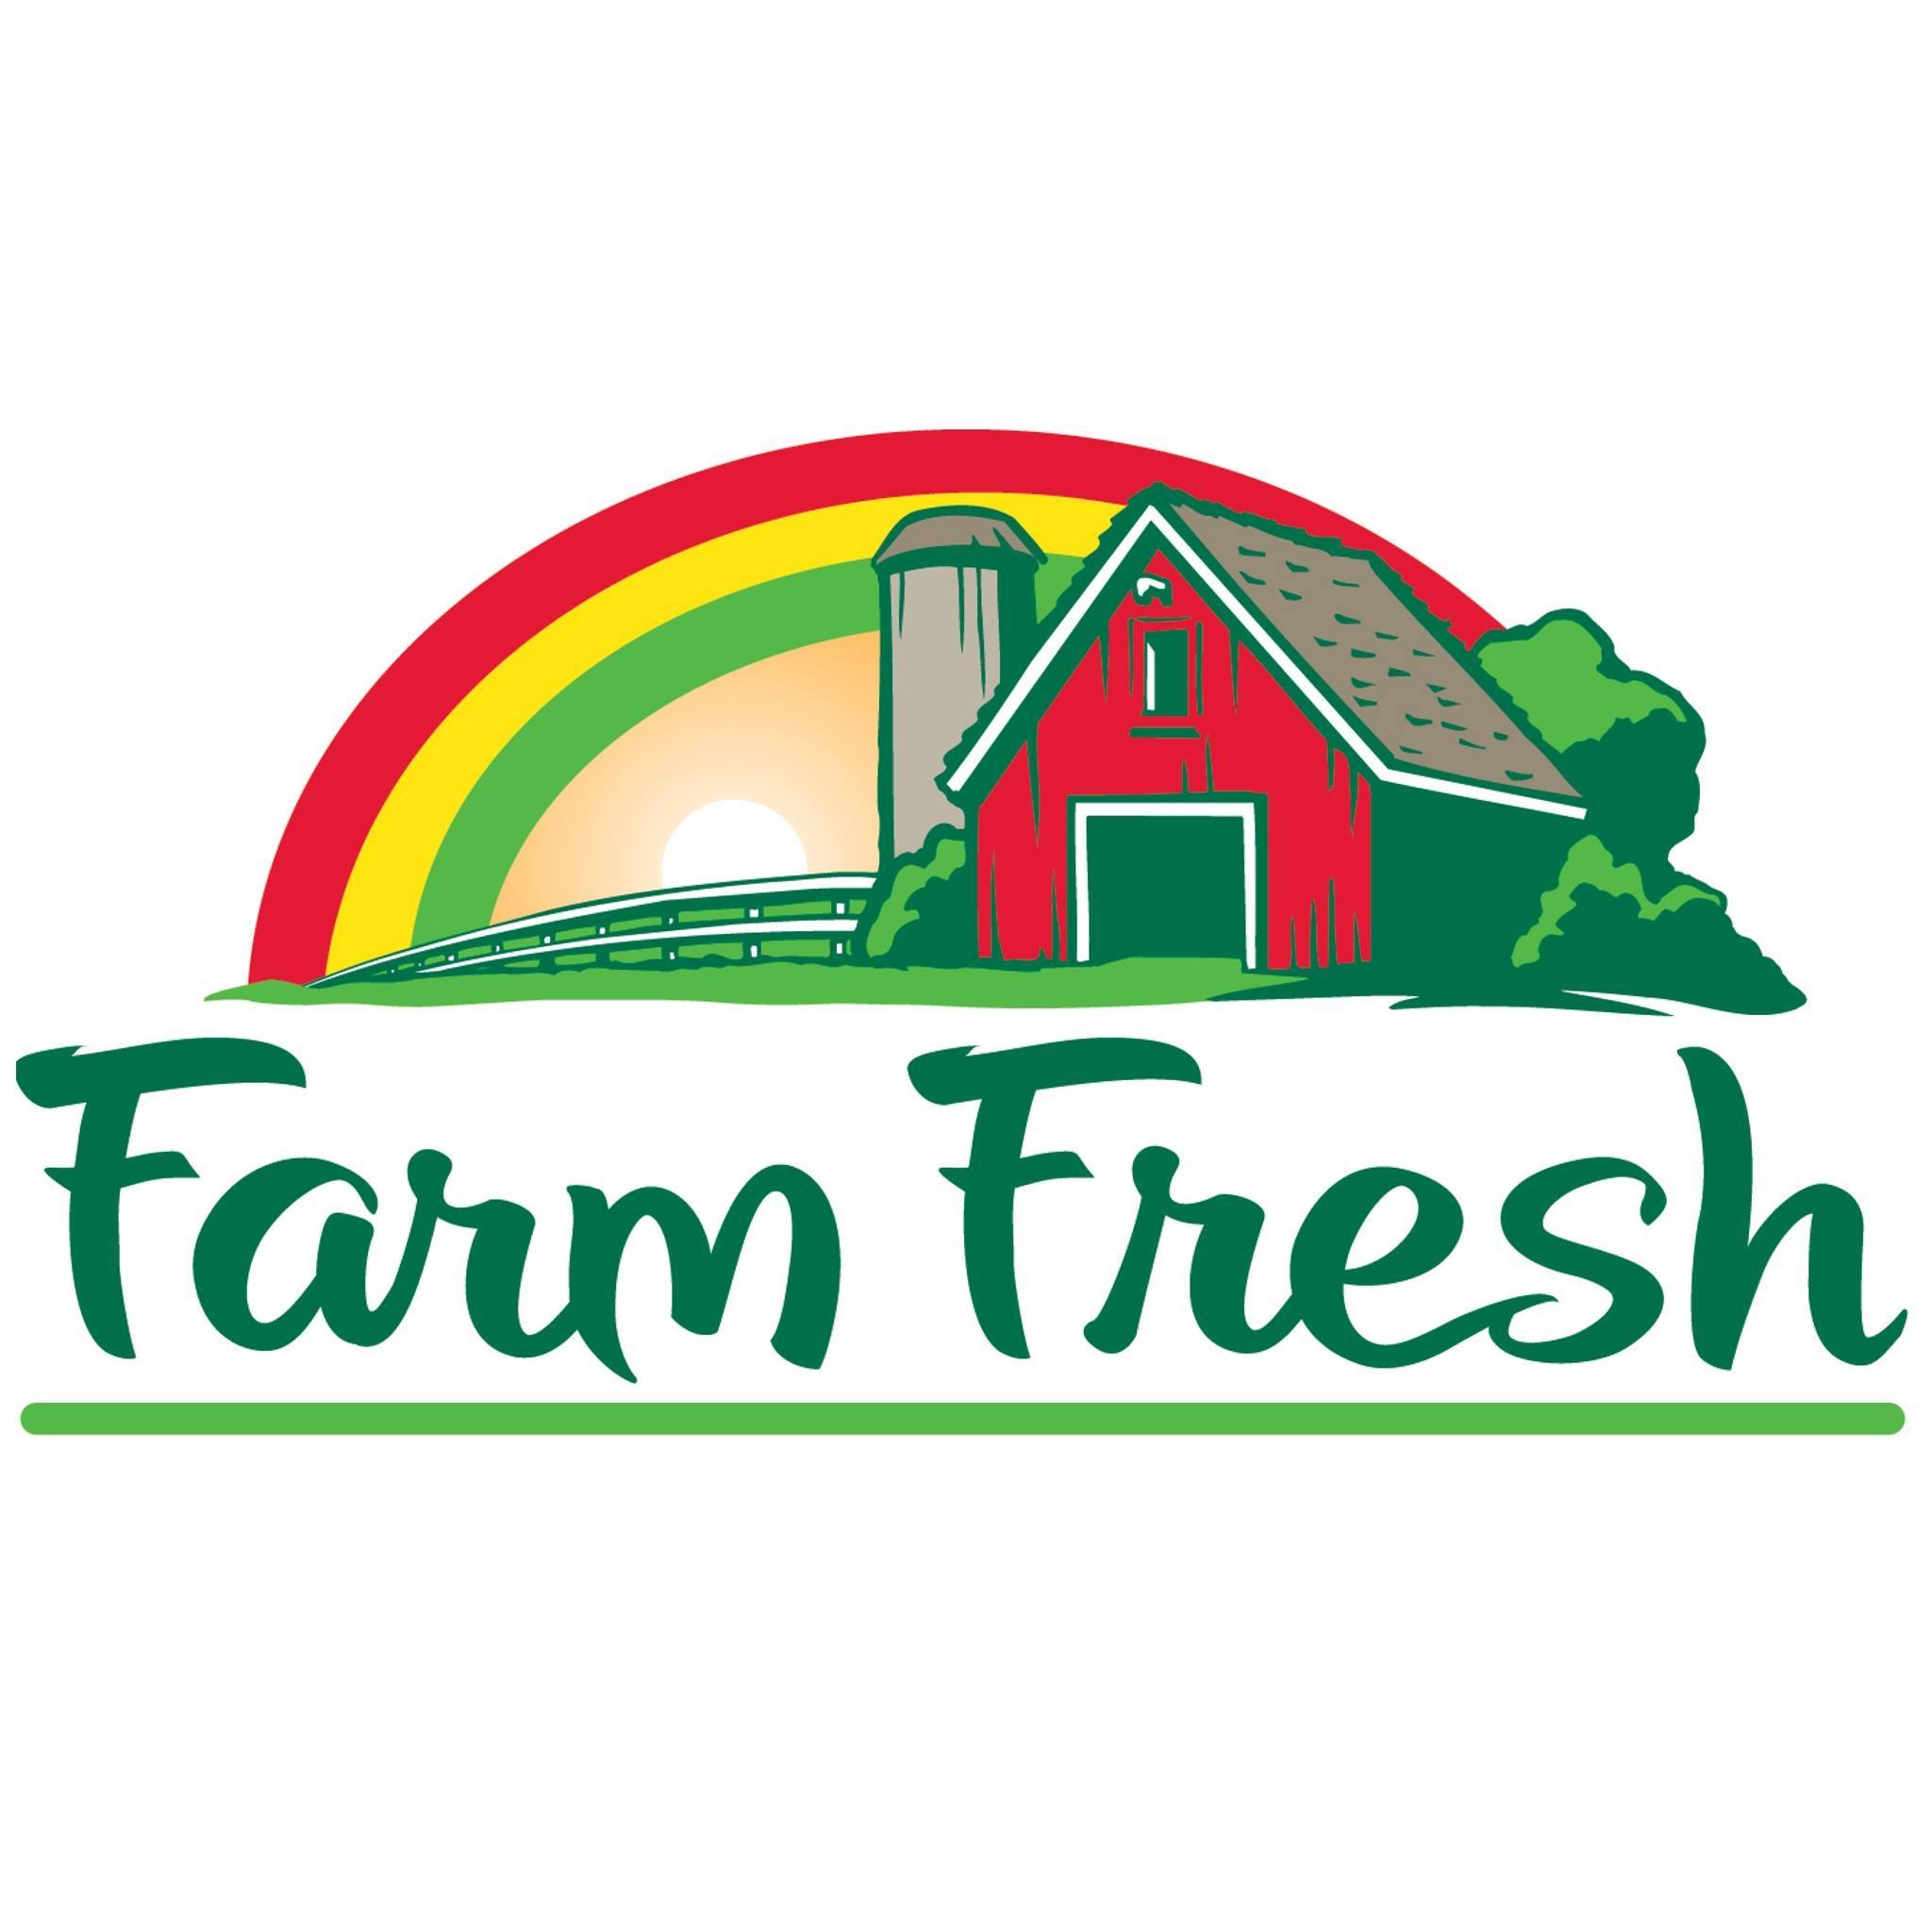 Company logo of Farm Fresh